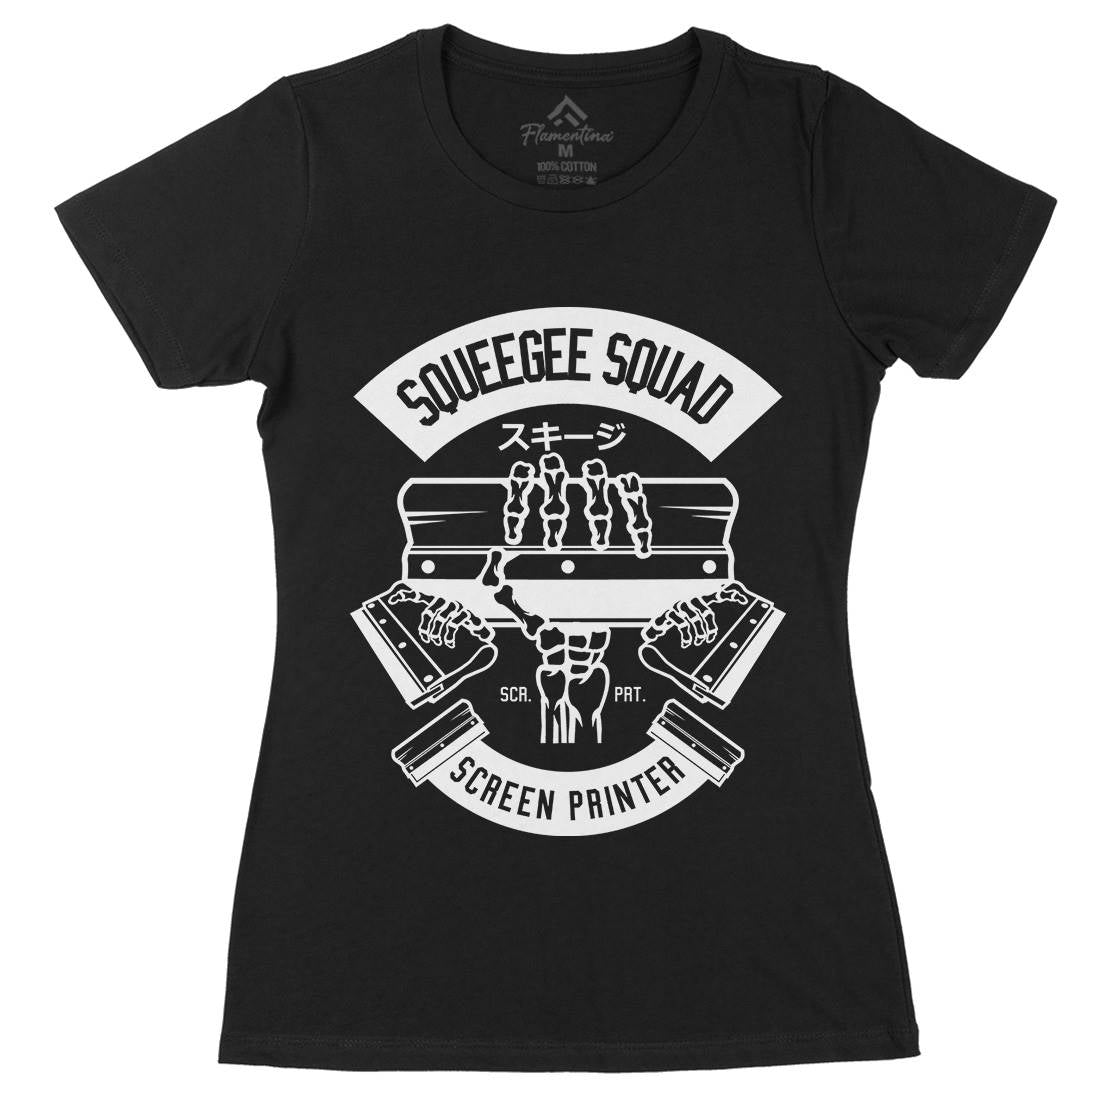 Squeegee Squad Womens Organic Crew Neck T-Shirt Retro B642